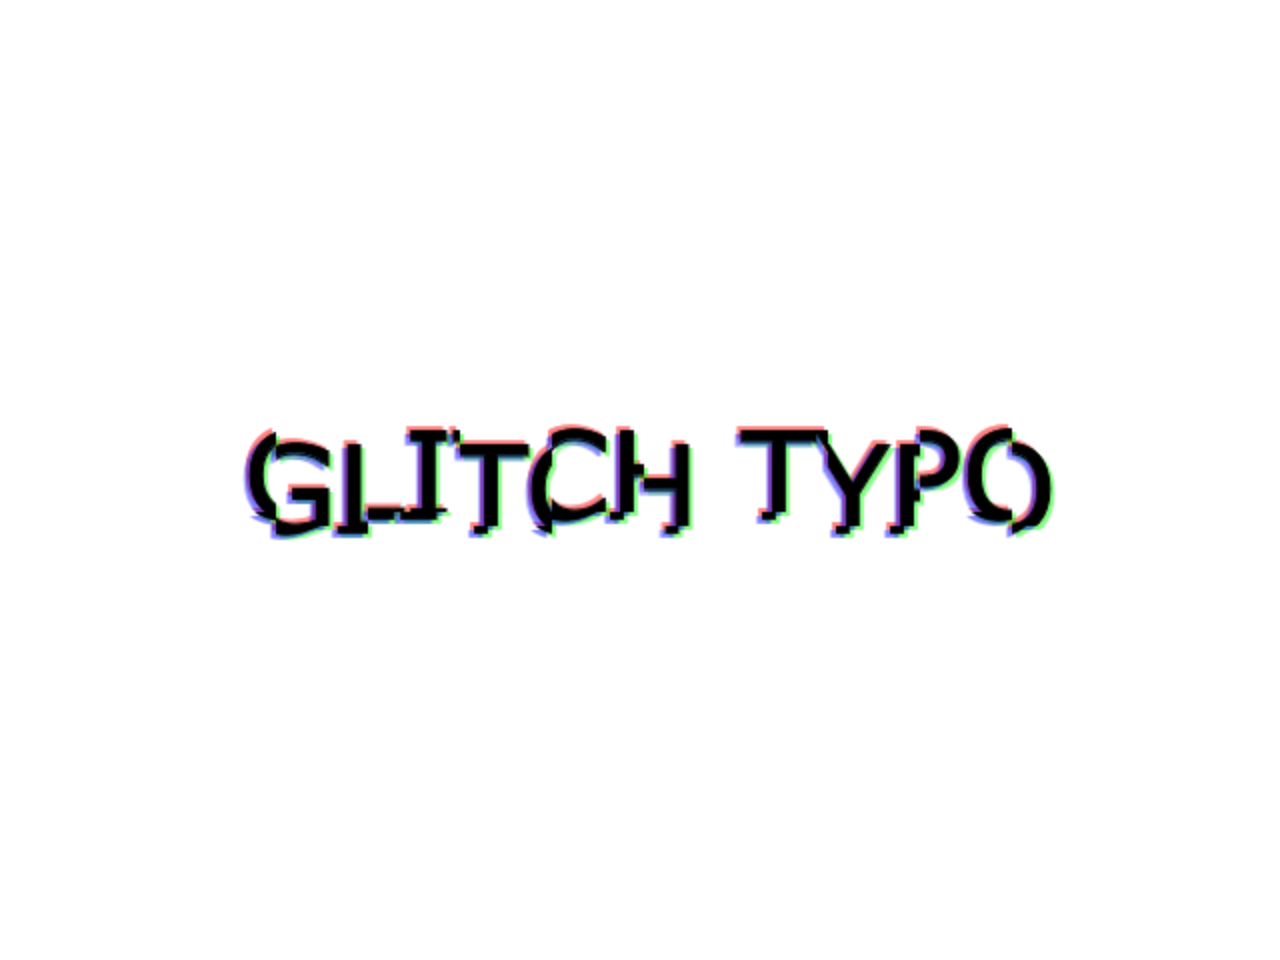 ᐈ Glitch Text Generator (𝒞𝑜𝓅𝓎 𝒶𝓃𝒹 𝒫𝒶𝓈𝓉𝑒) ✓ Free